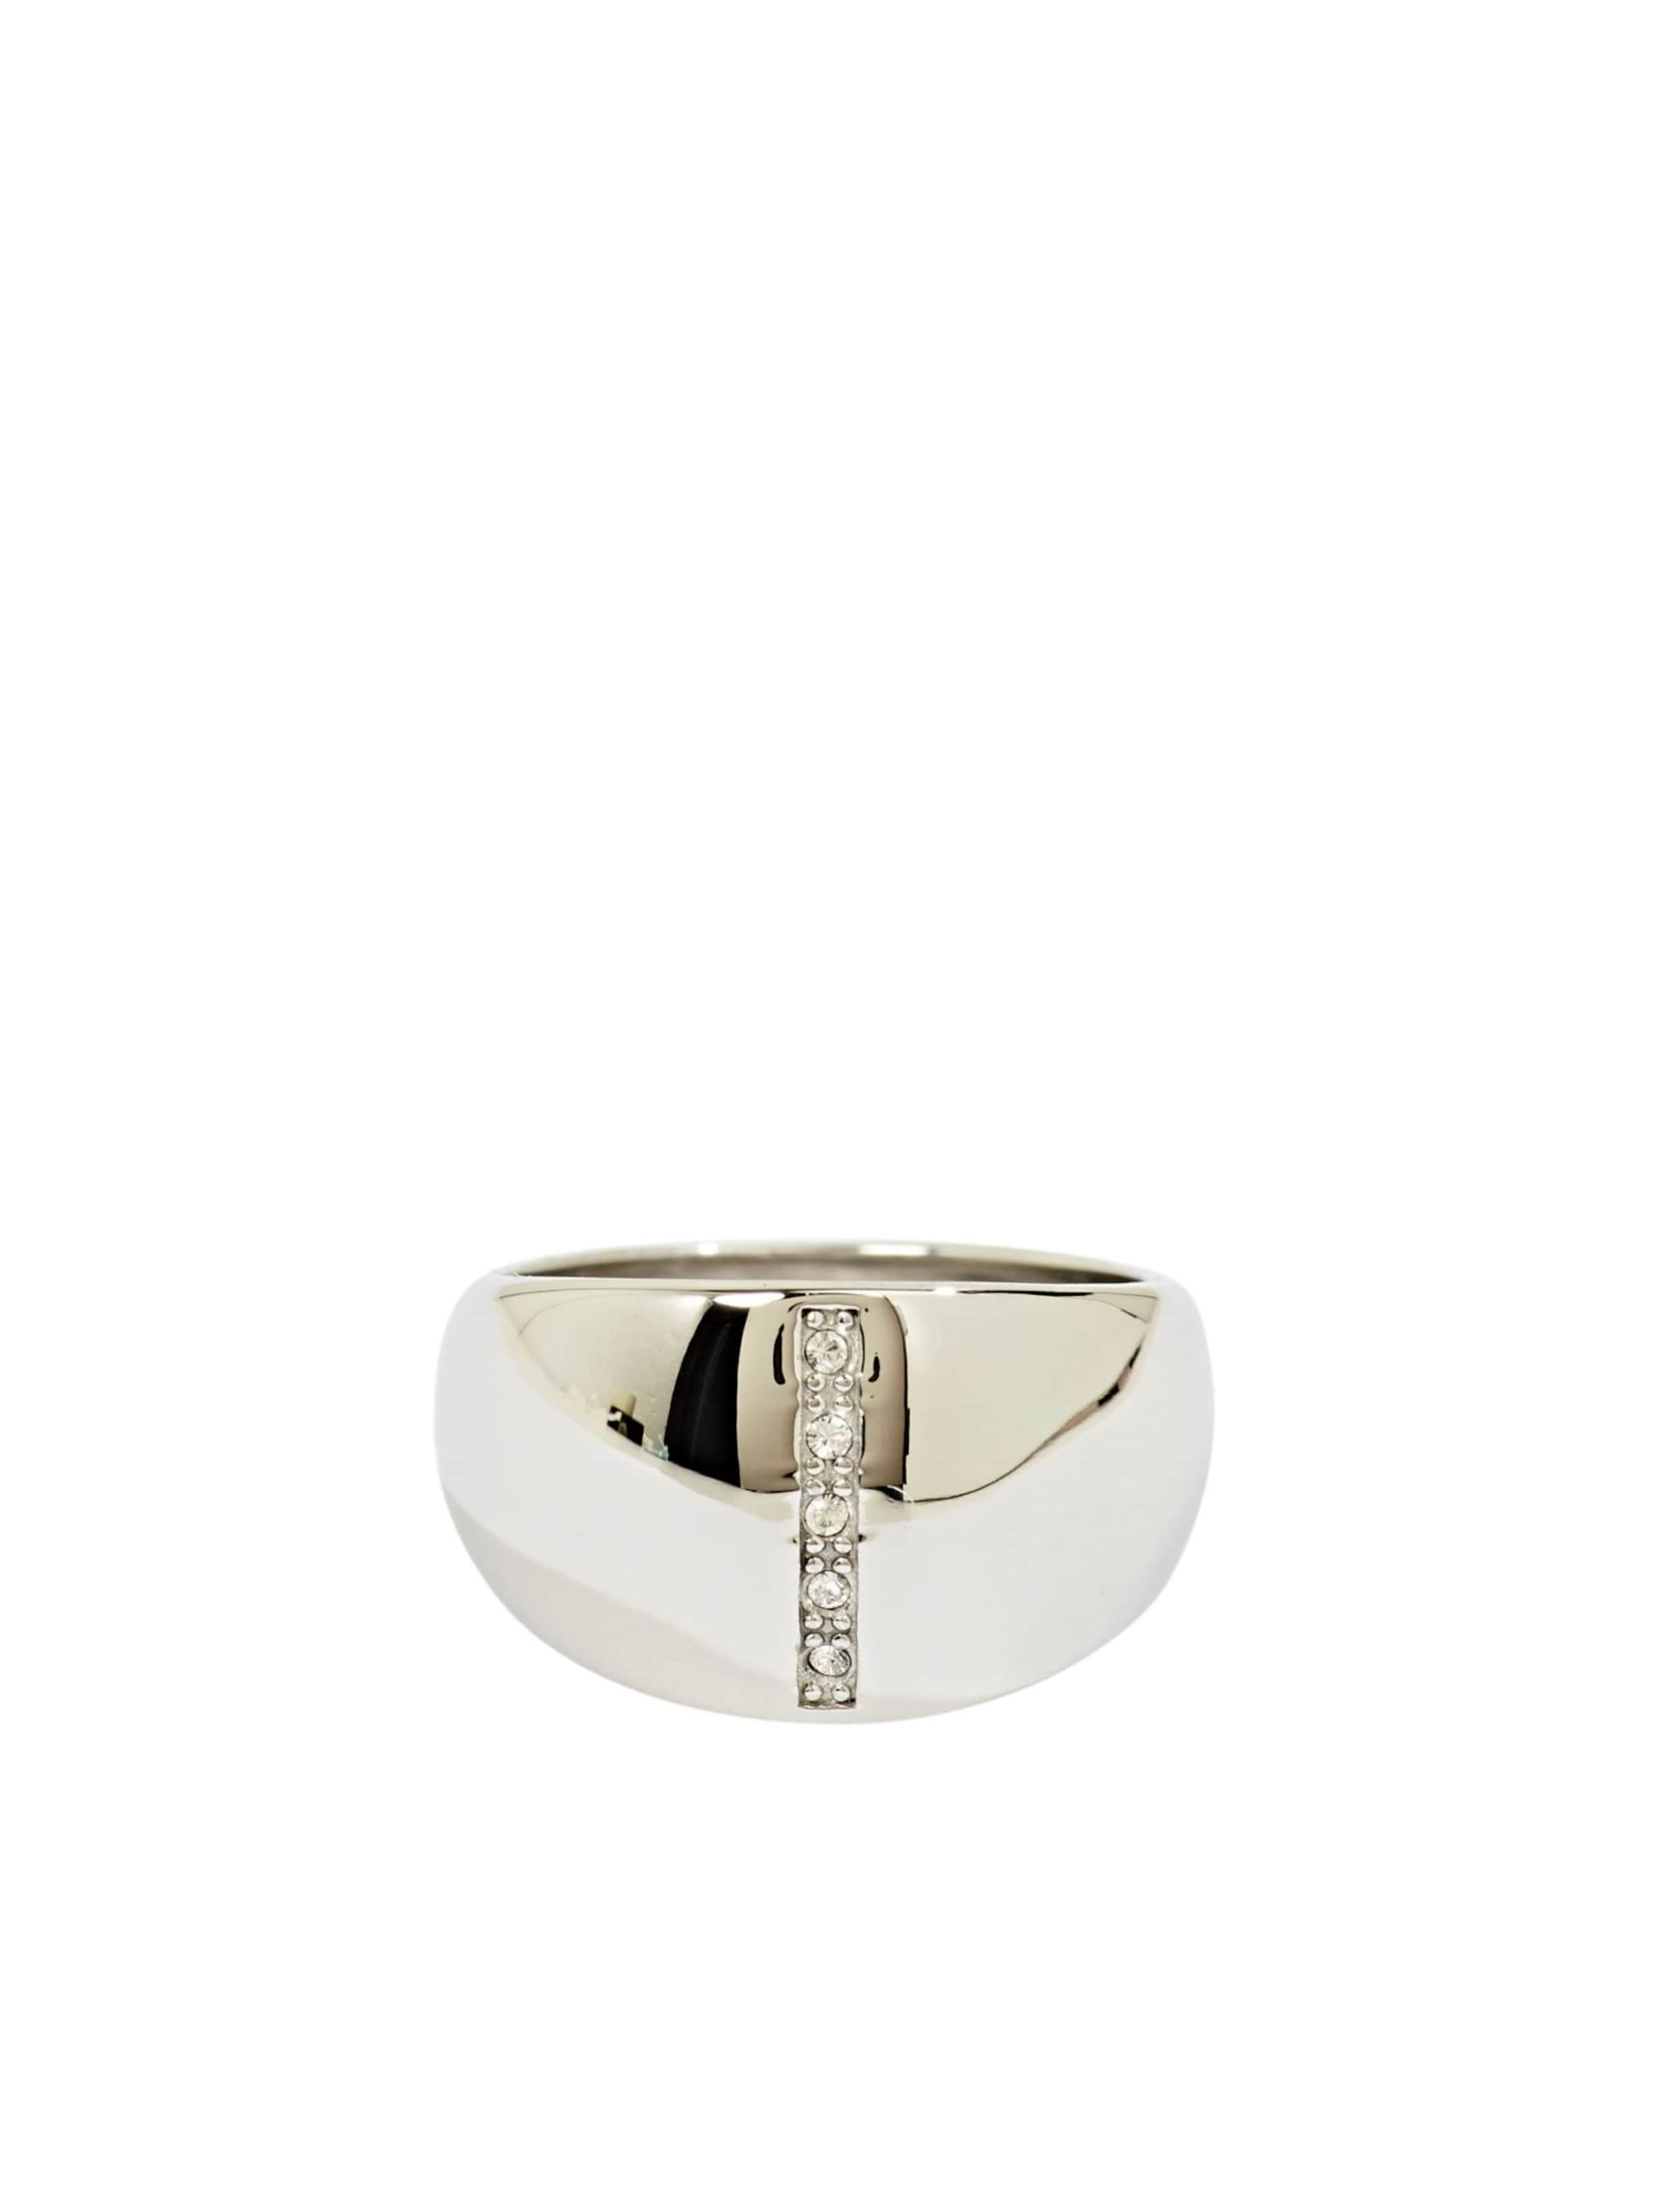 ESPRIT Ring in Silber 